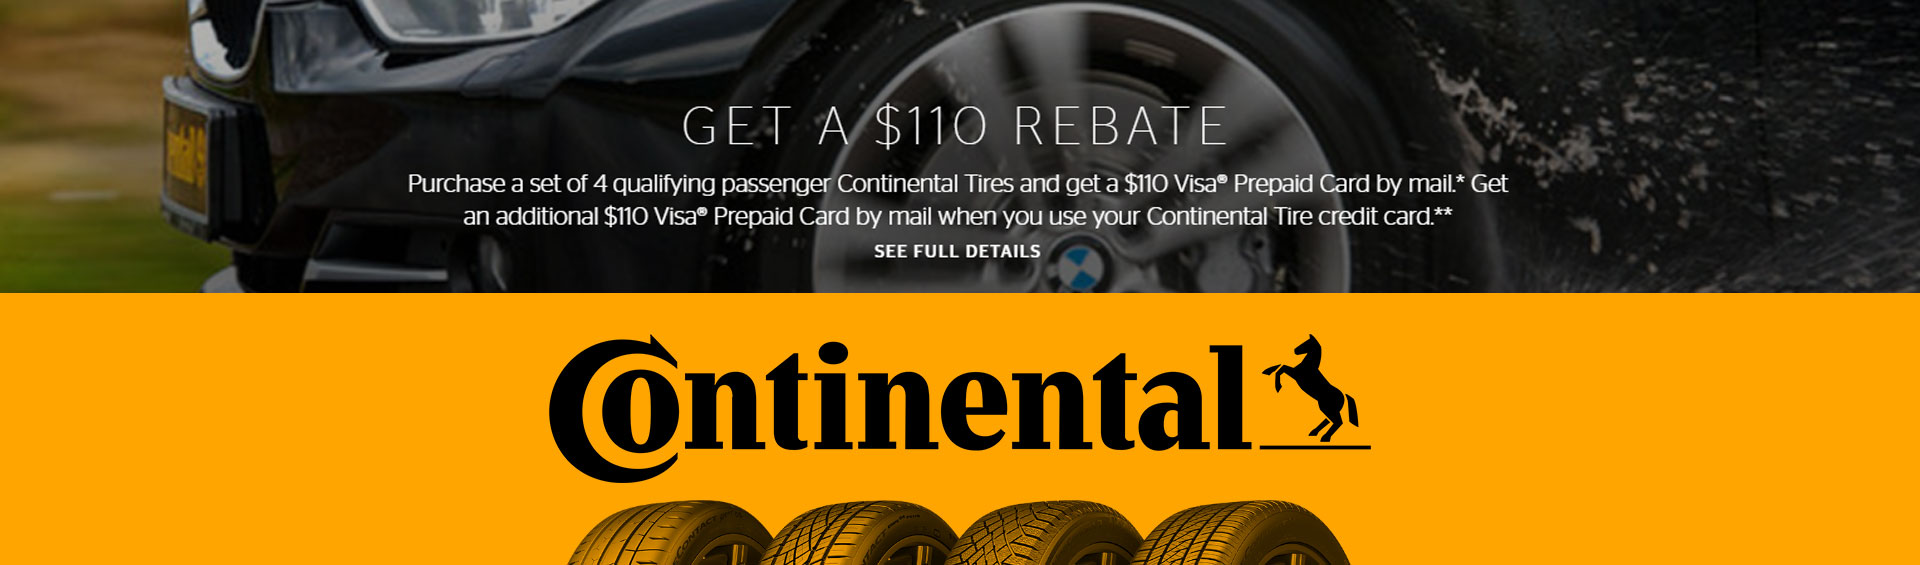 Continental Tires - Get a $110 Rebate